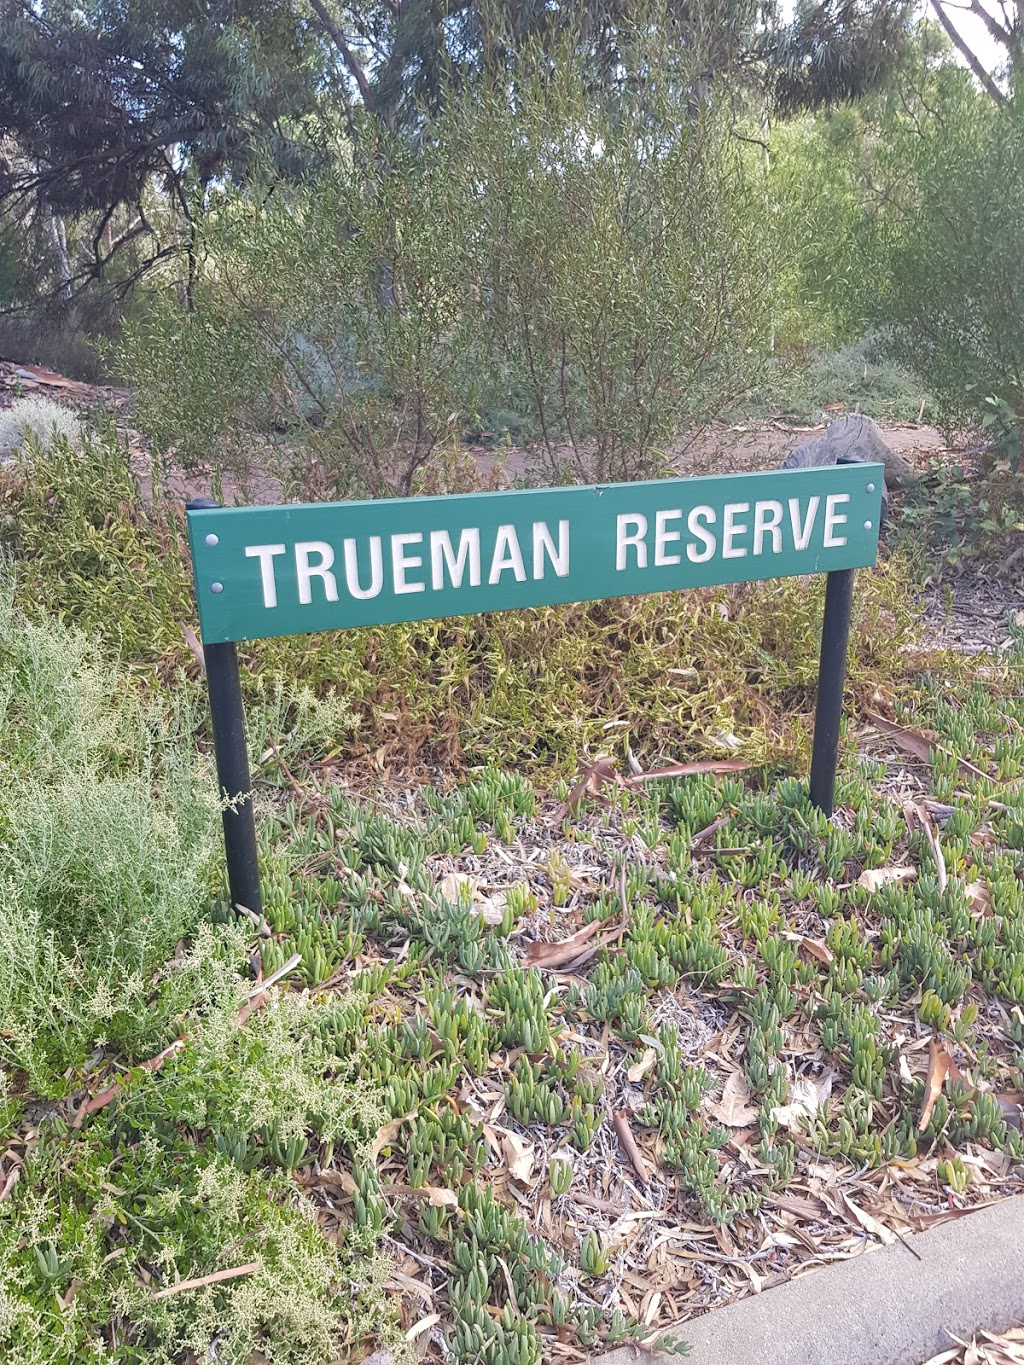 Trueman Reserve | park | Lockleys SA 5032, Australia